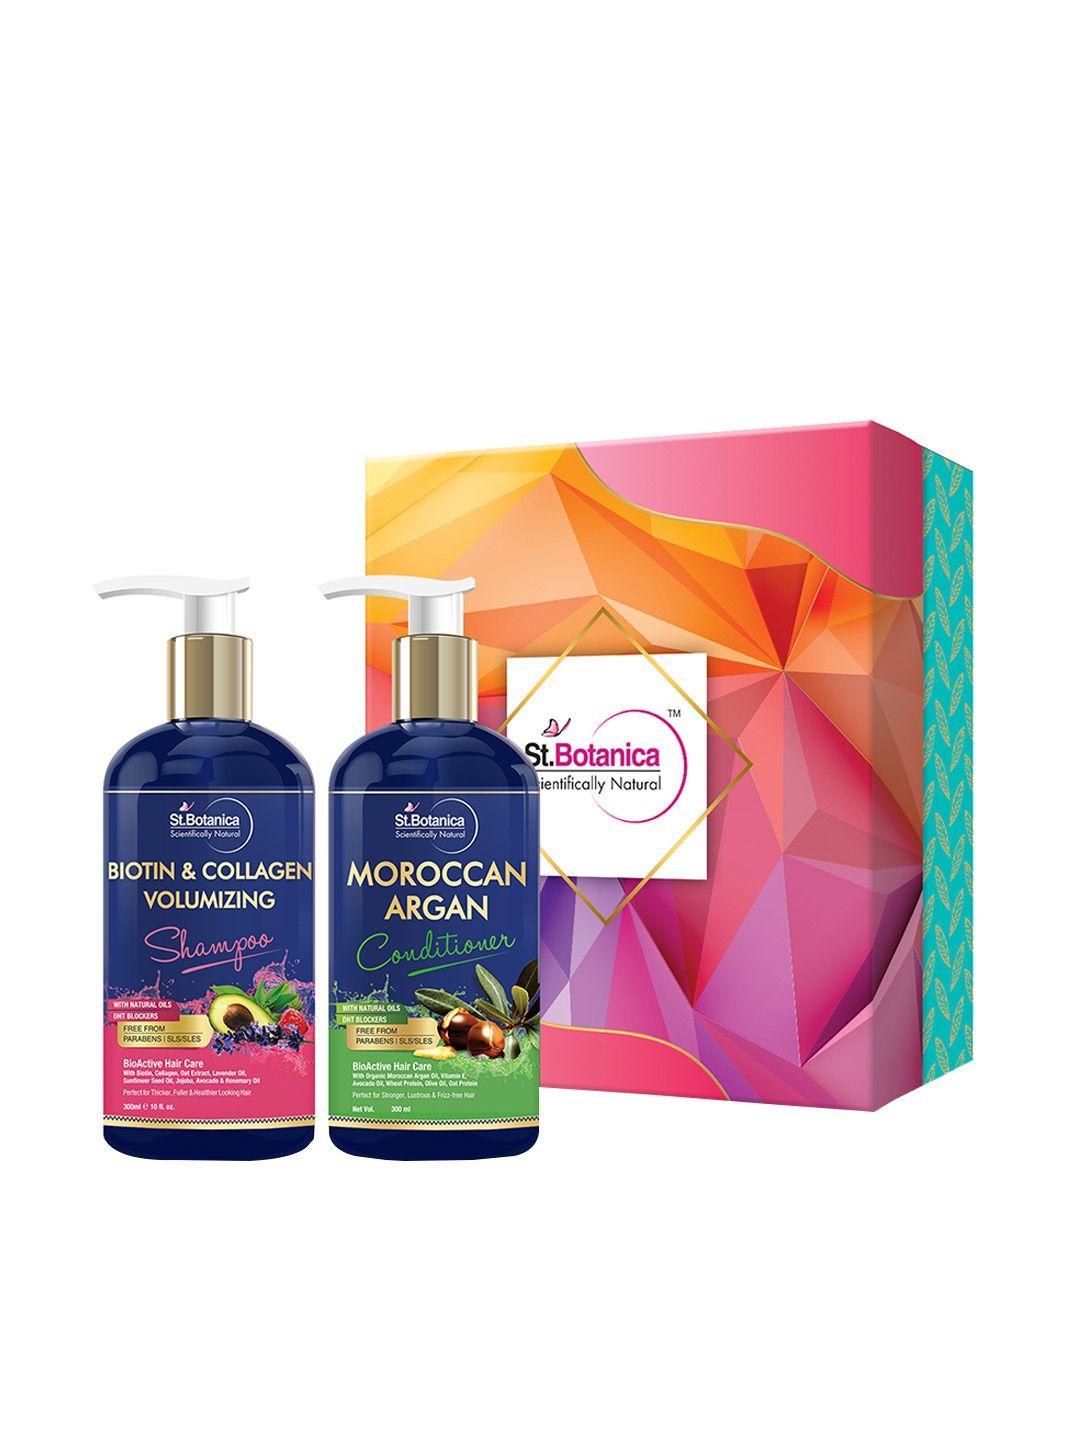 st.-botanica-biotin-and-collagen-shampoo-with-moroccan-argan-conditioner-600ml